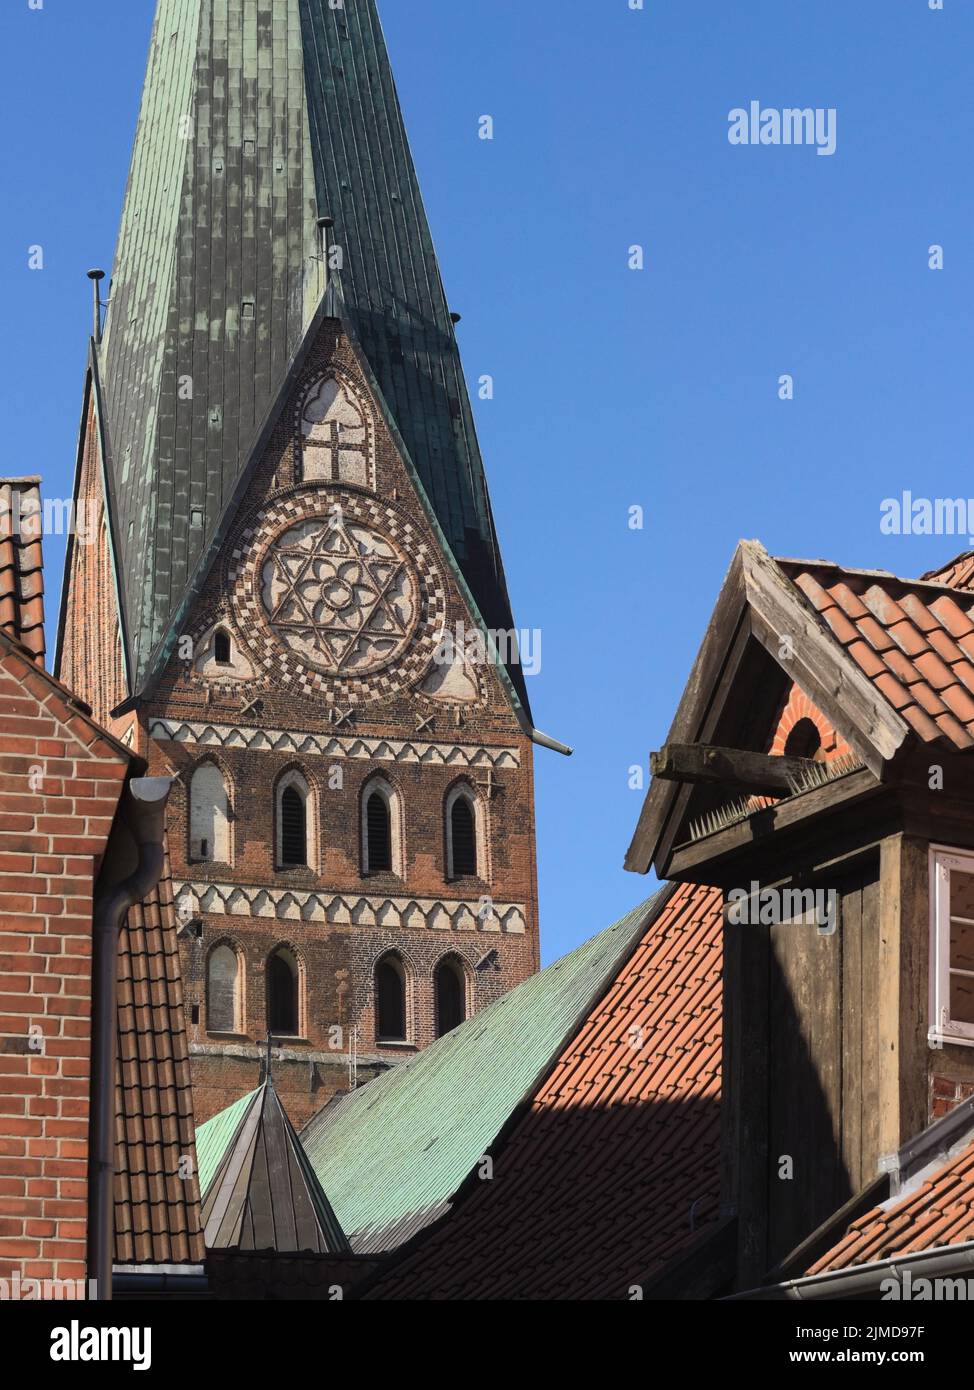 LÃ¼neburg - Tower of St John's Church, Germany Stock Photo